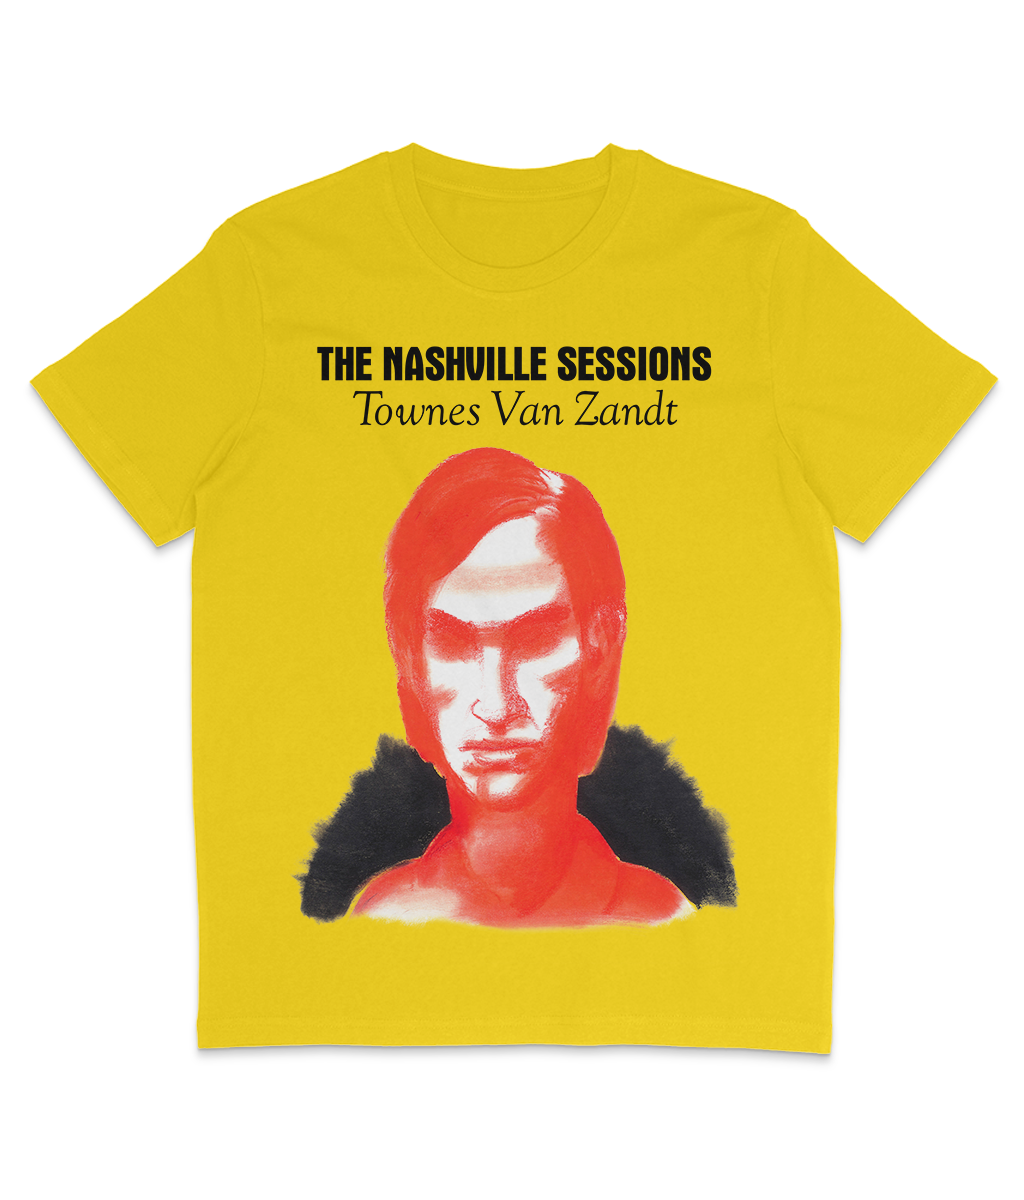 Townes Van Zandt - The Nashville Sessions - 1993